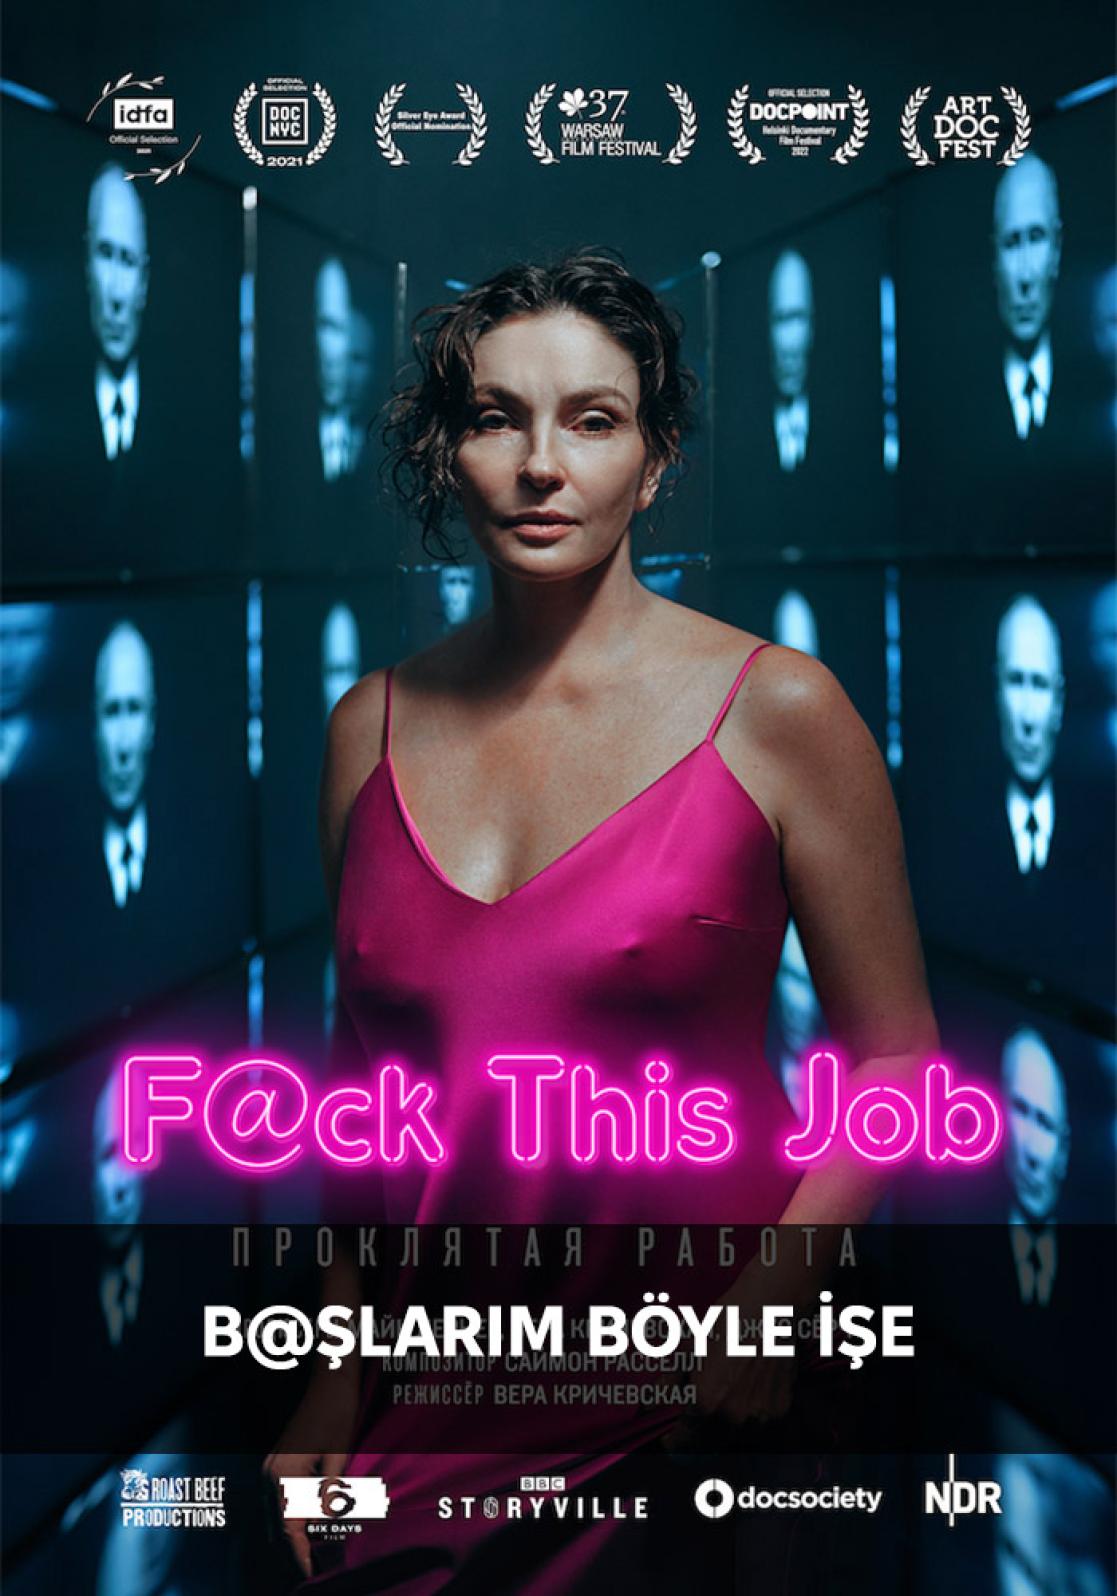 F@ck-This-Job-poster resized turkce